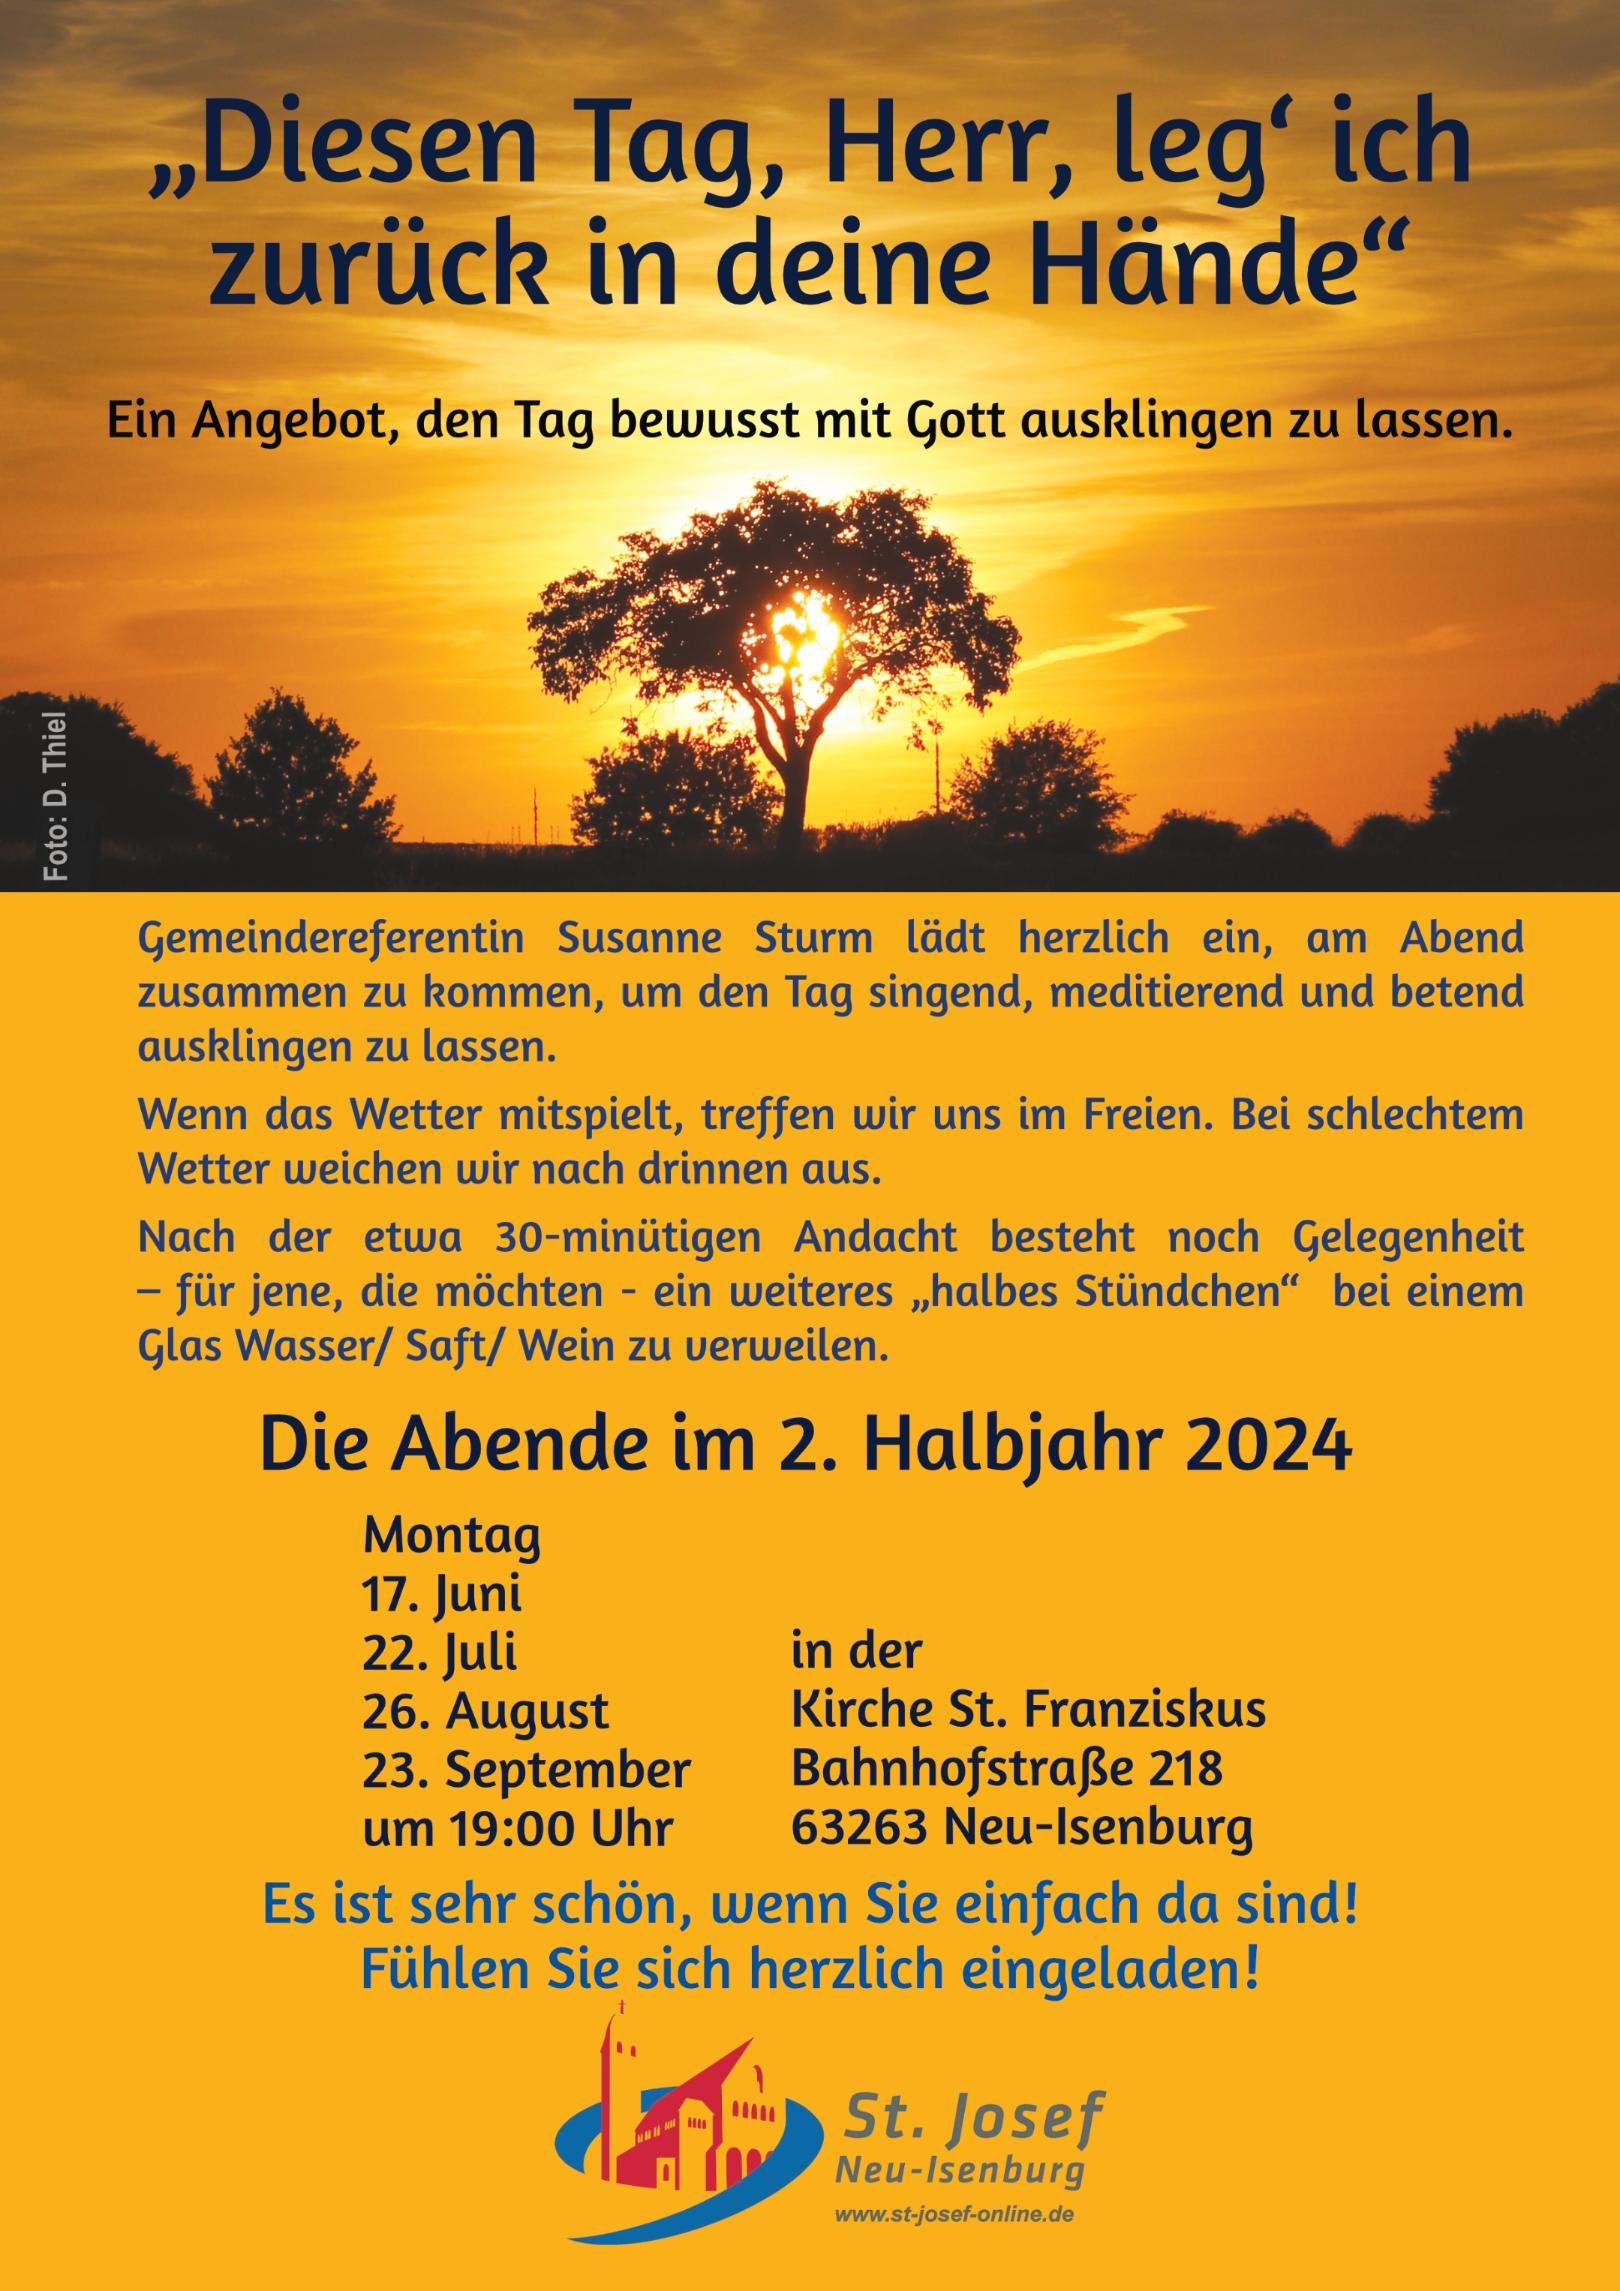 Plakat Diesen Tag II 2024 (c) D. Thiel